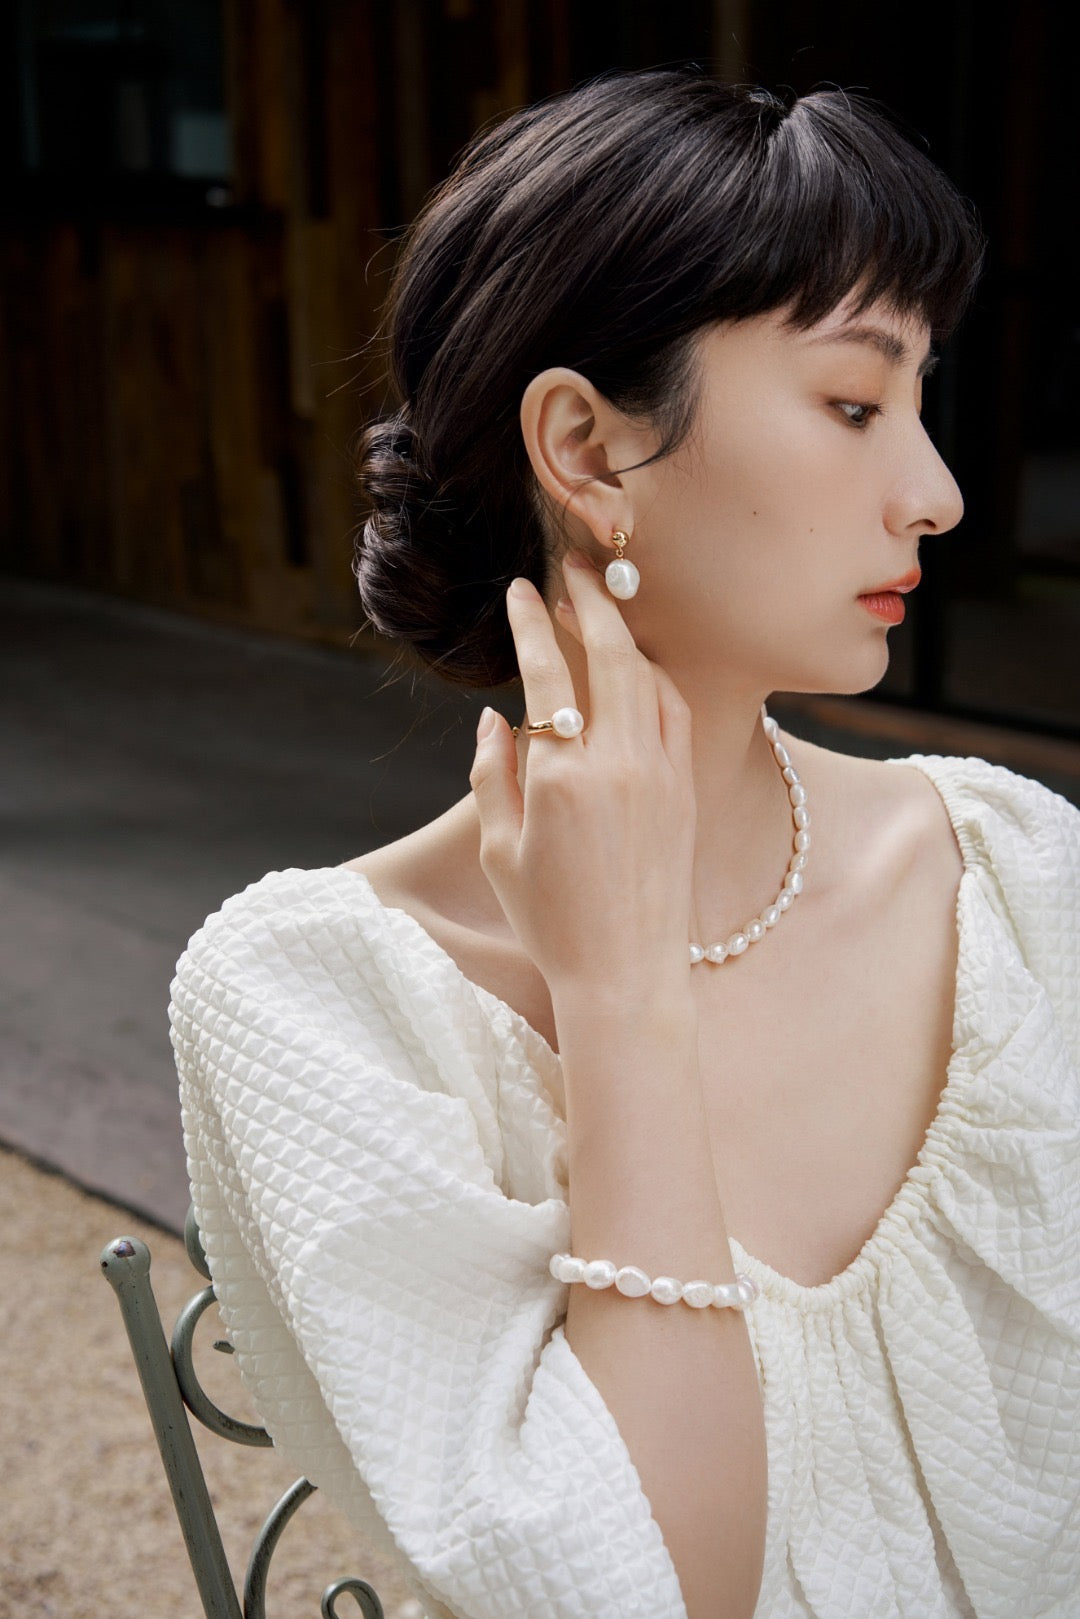 Large Irregular Baroque Pearl Bracelet | Estincele Jewellery | Women's Bracelet | Pearl bracelet